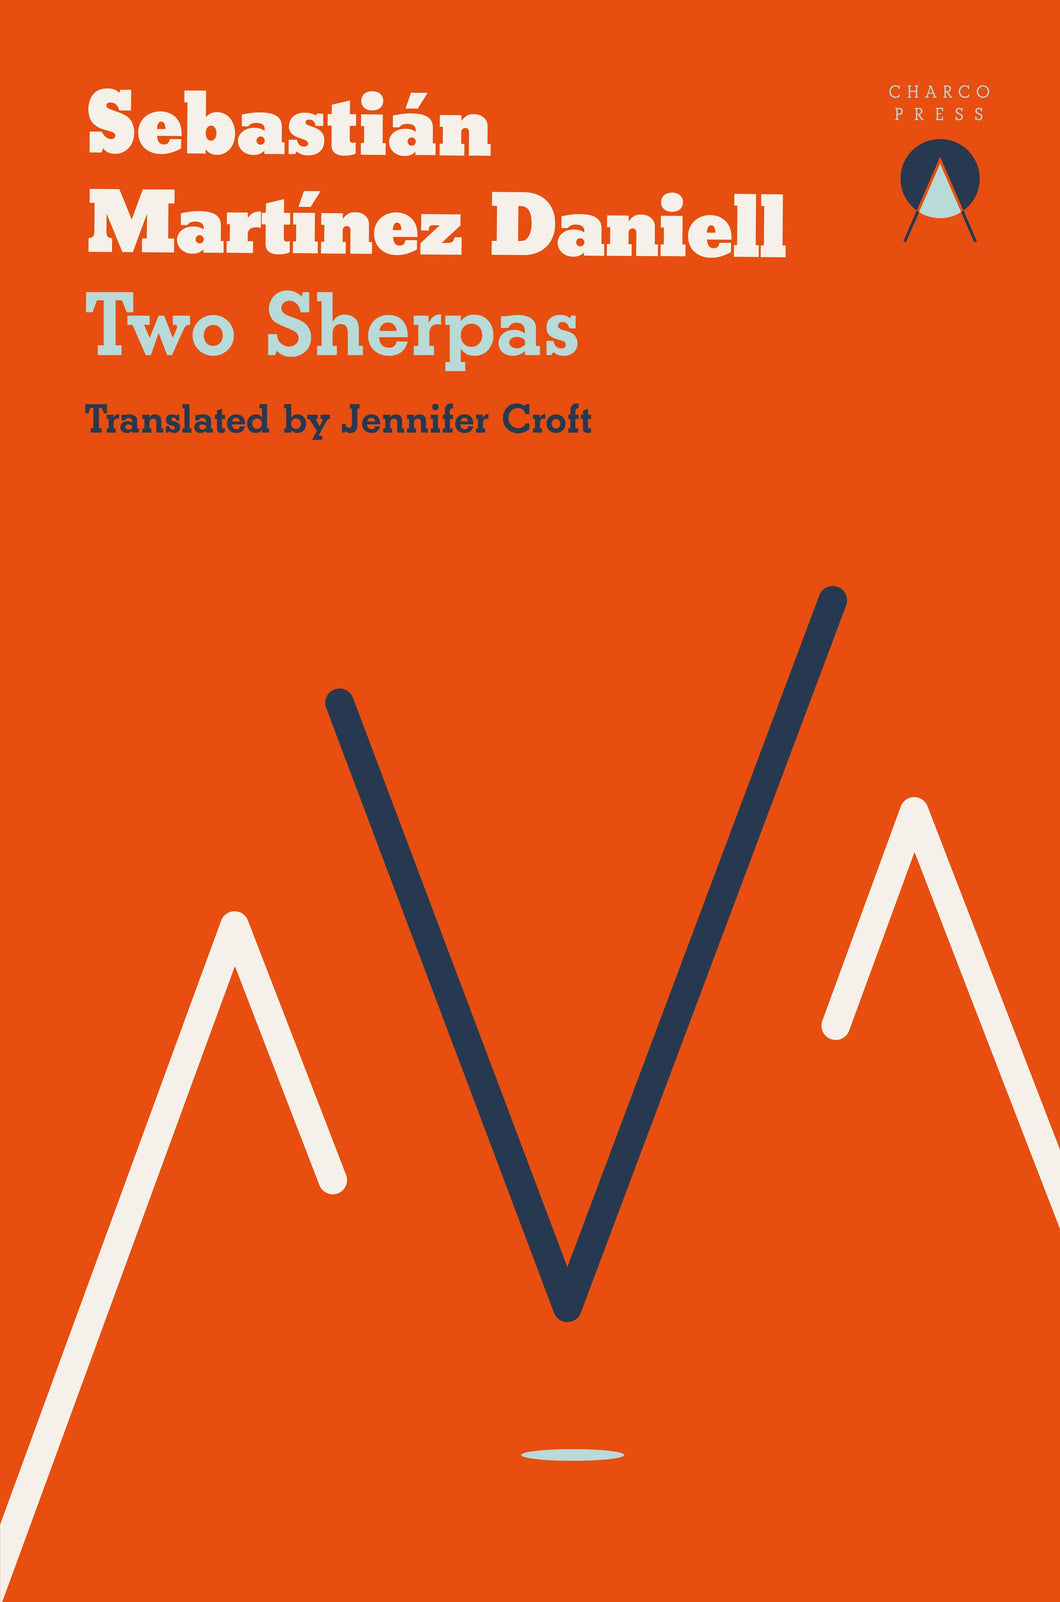 Two Sherpas by Sebastian Martinez Daniell